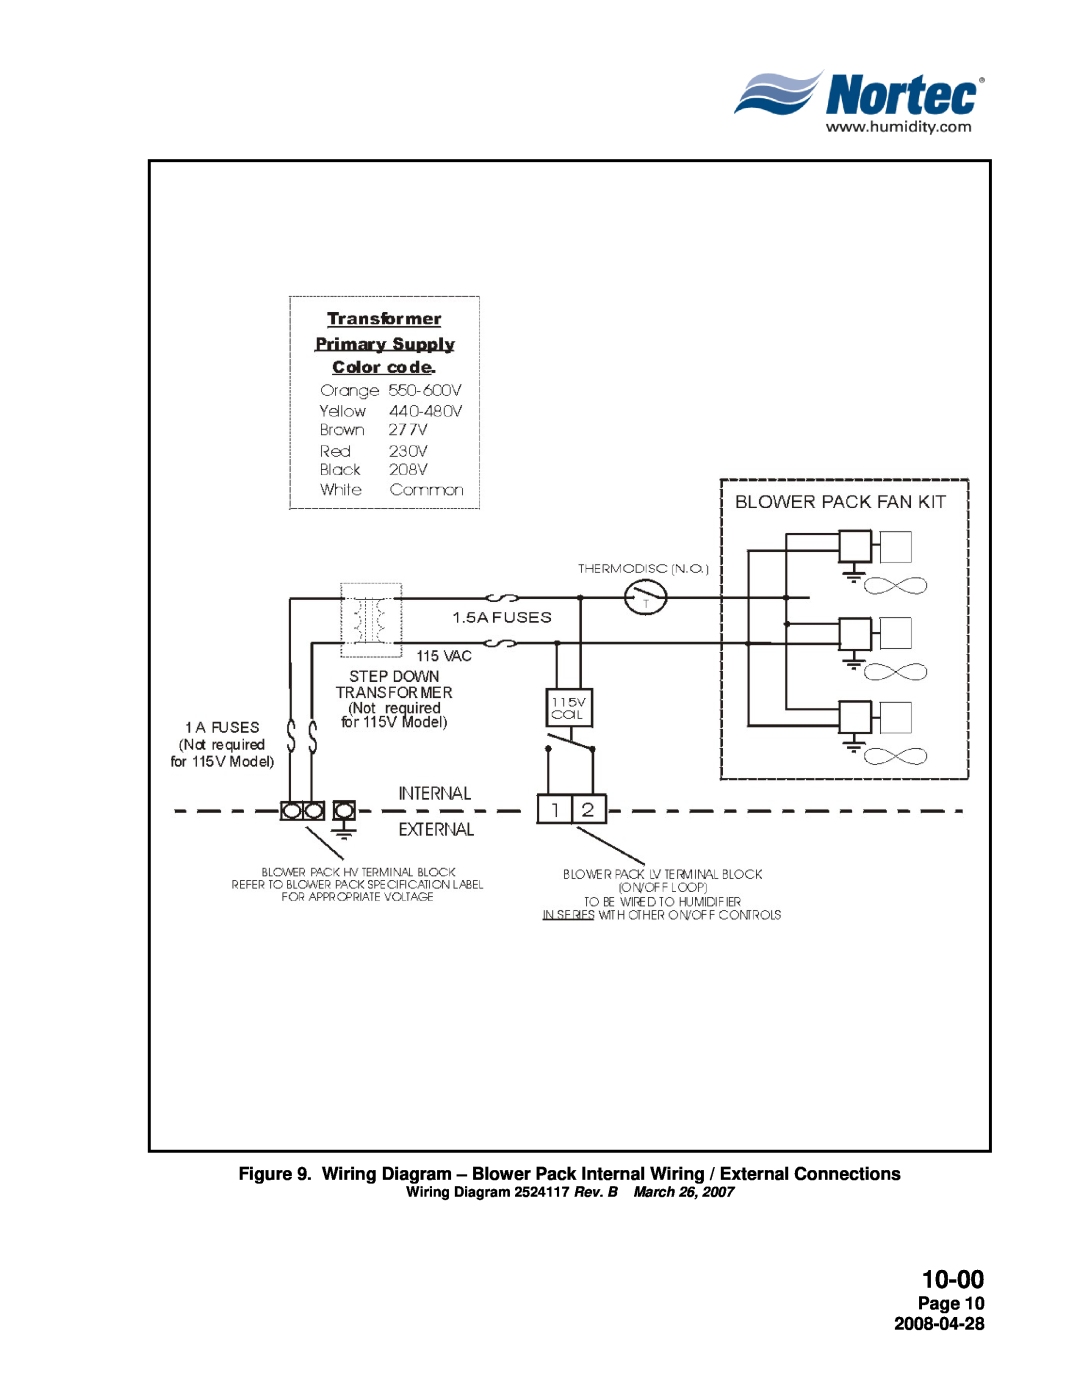 Nortec 380V installation manual 10-00, Page, Wiring Diagram 2524117 Rev. B March 